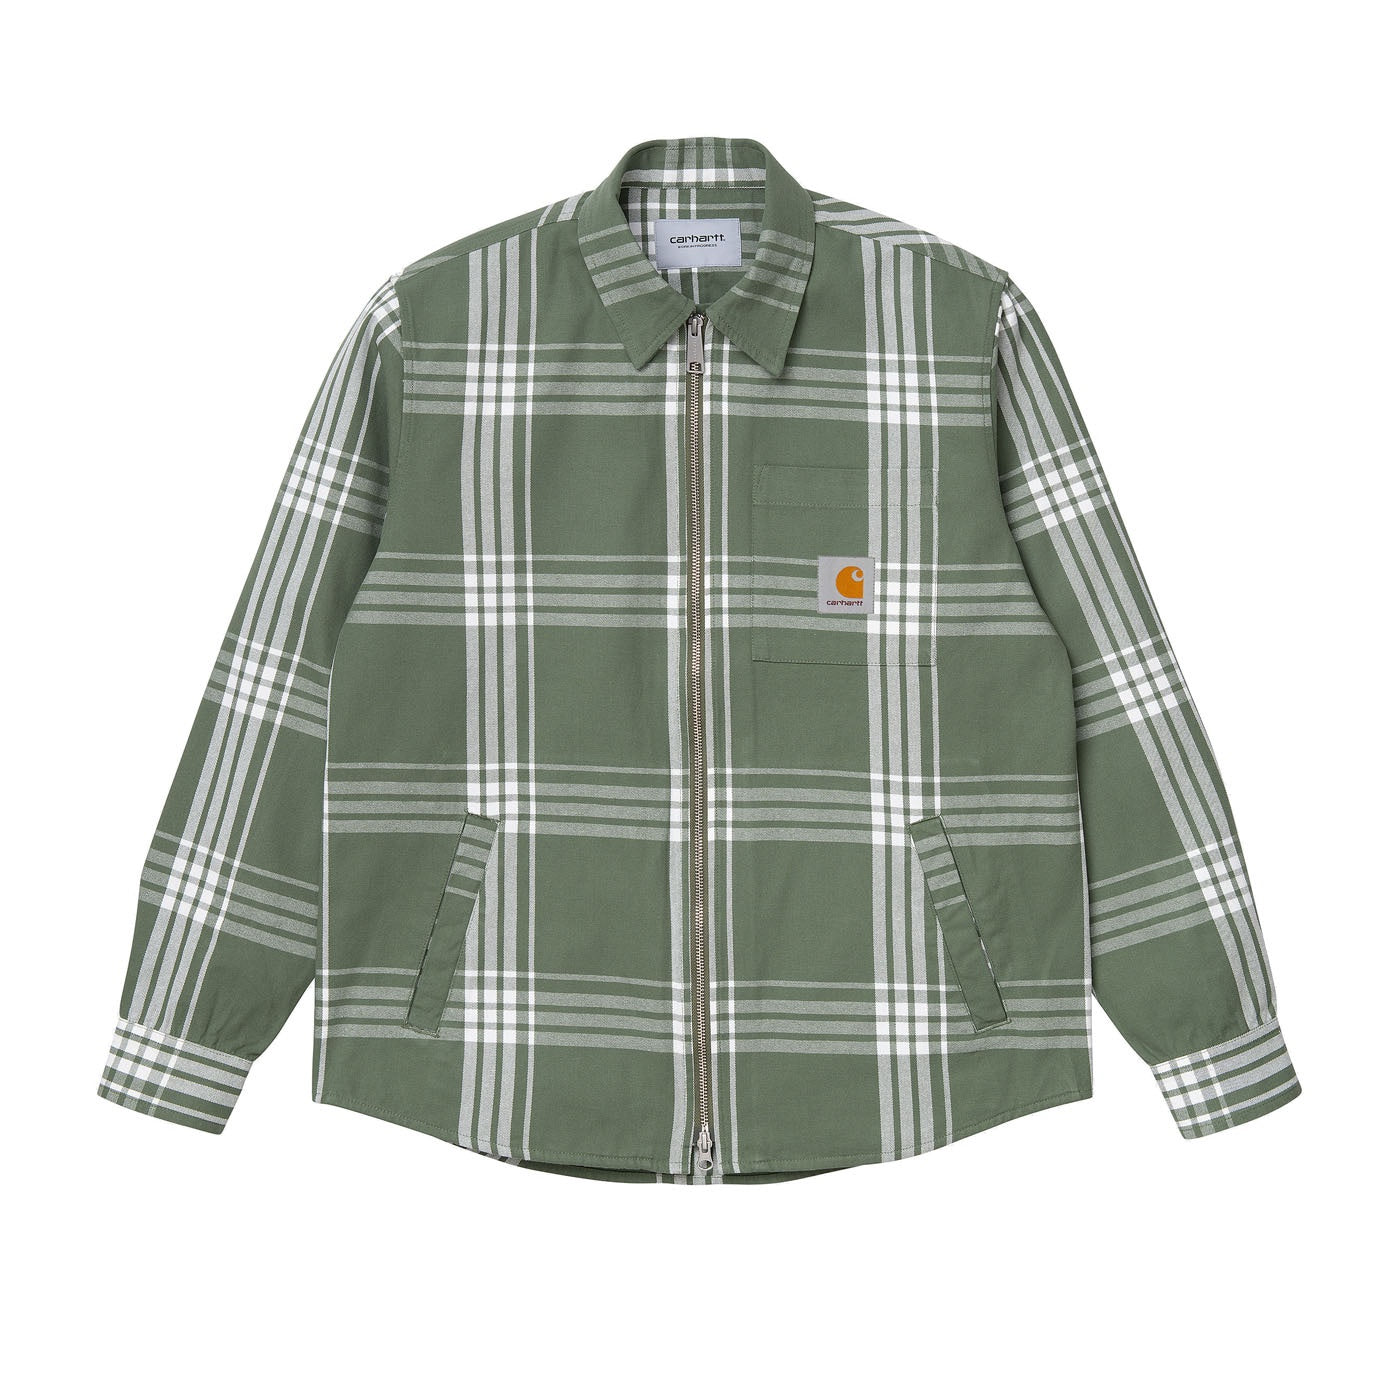 Carhartt WIP Cahill Shirt Jacket Cahill Check/Dollar Green